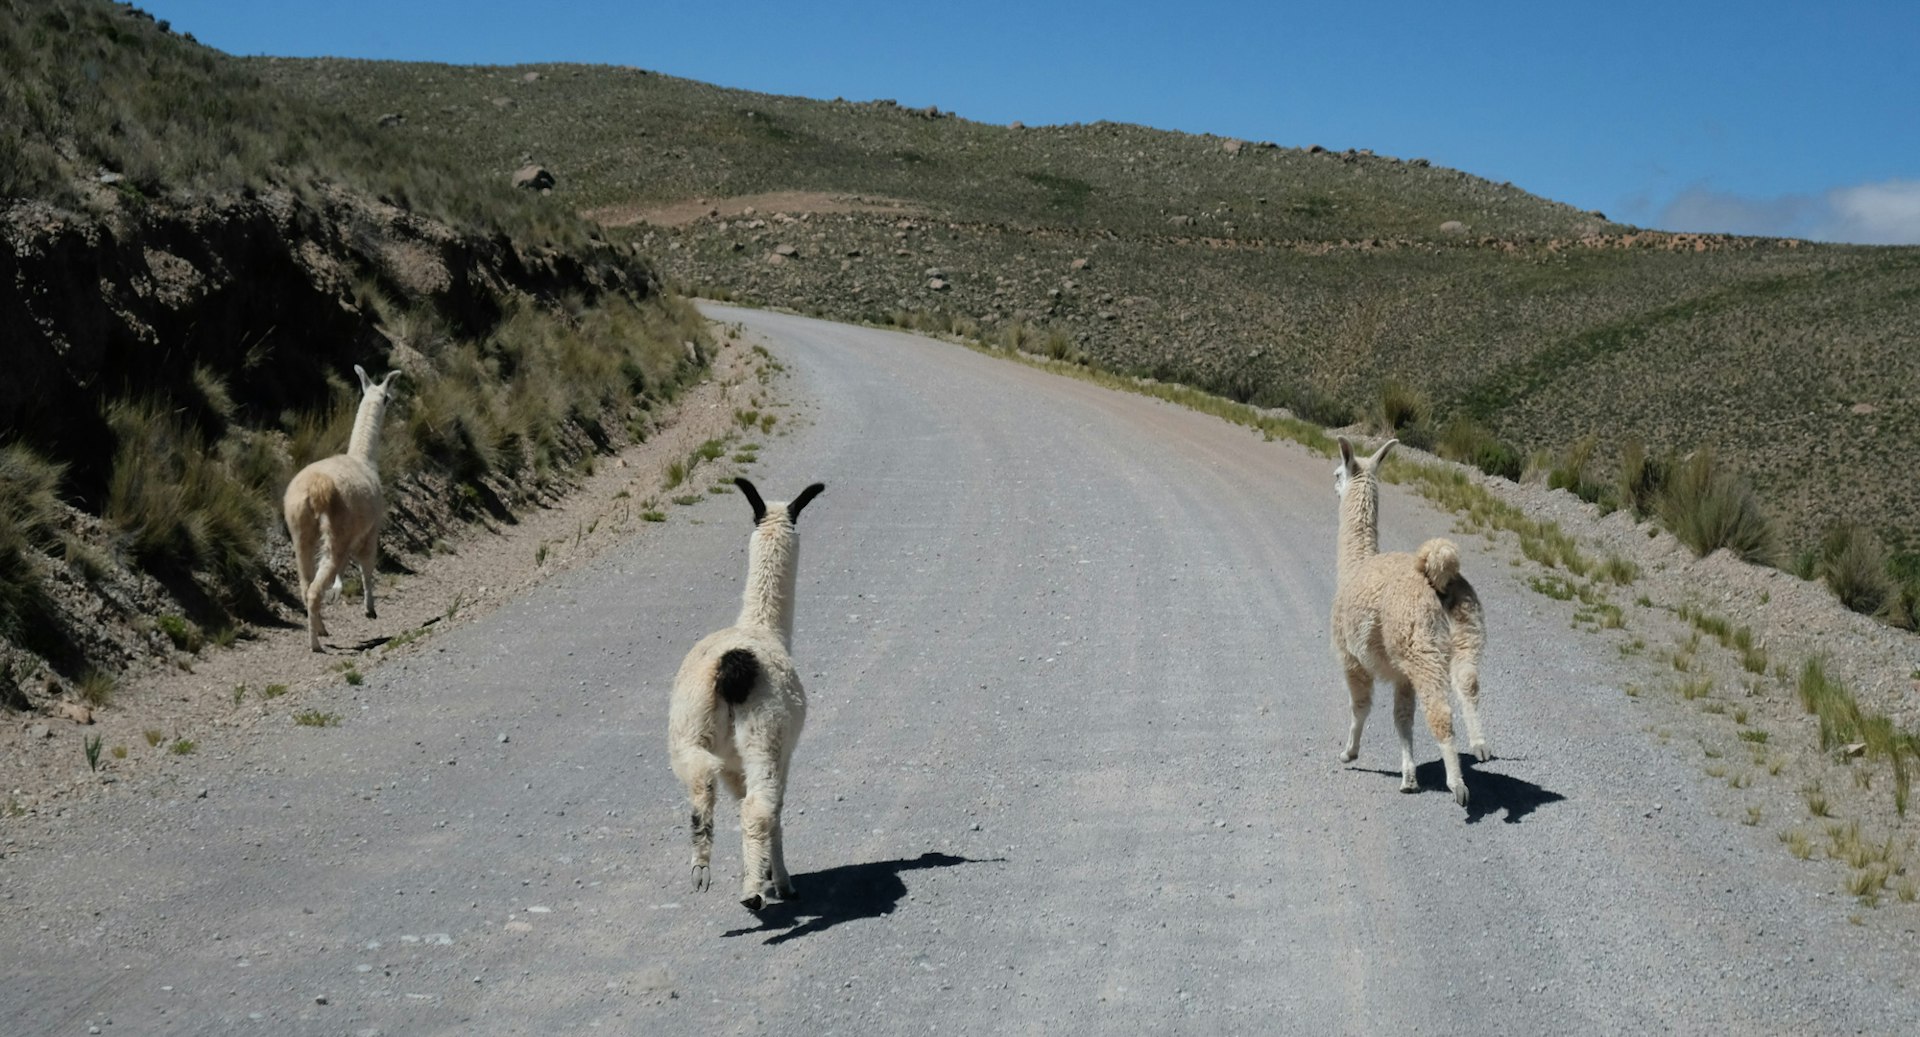 Llamas on a quiet mountain road in Peru